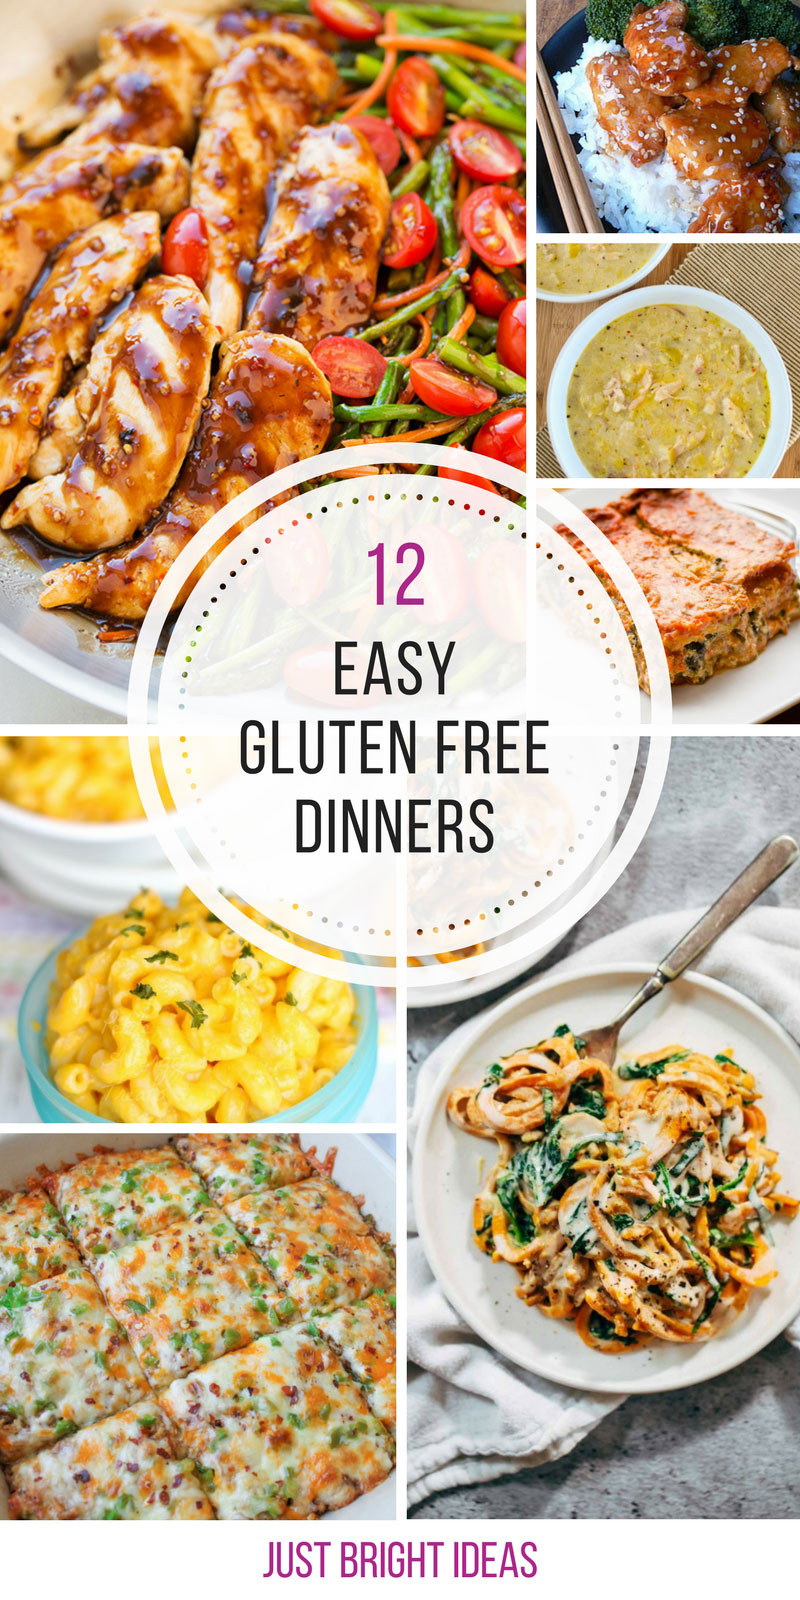 Gluten Free Dinner Ideas
 12 Easy Gluten Free Dinner Recipes Your Family Will Love